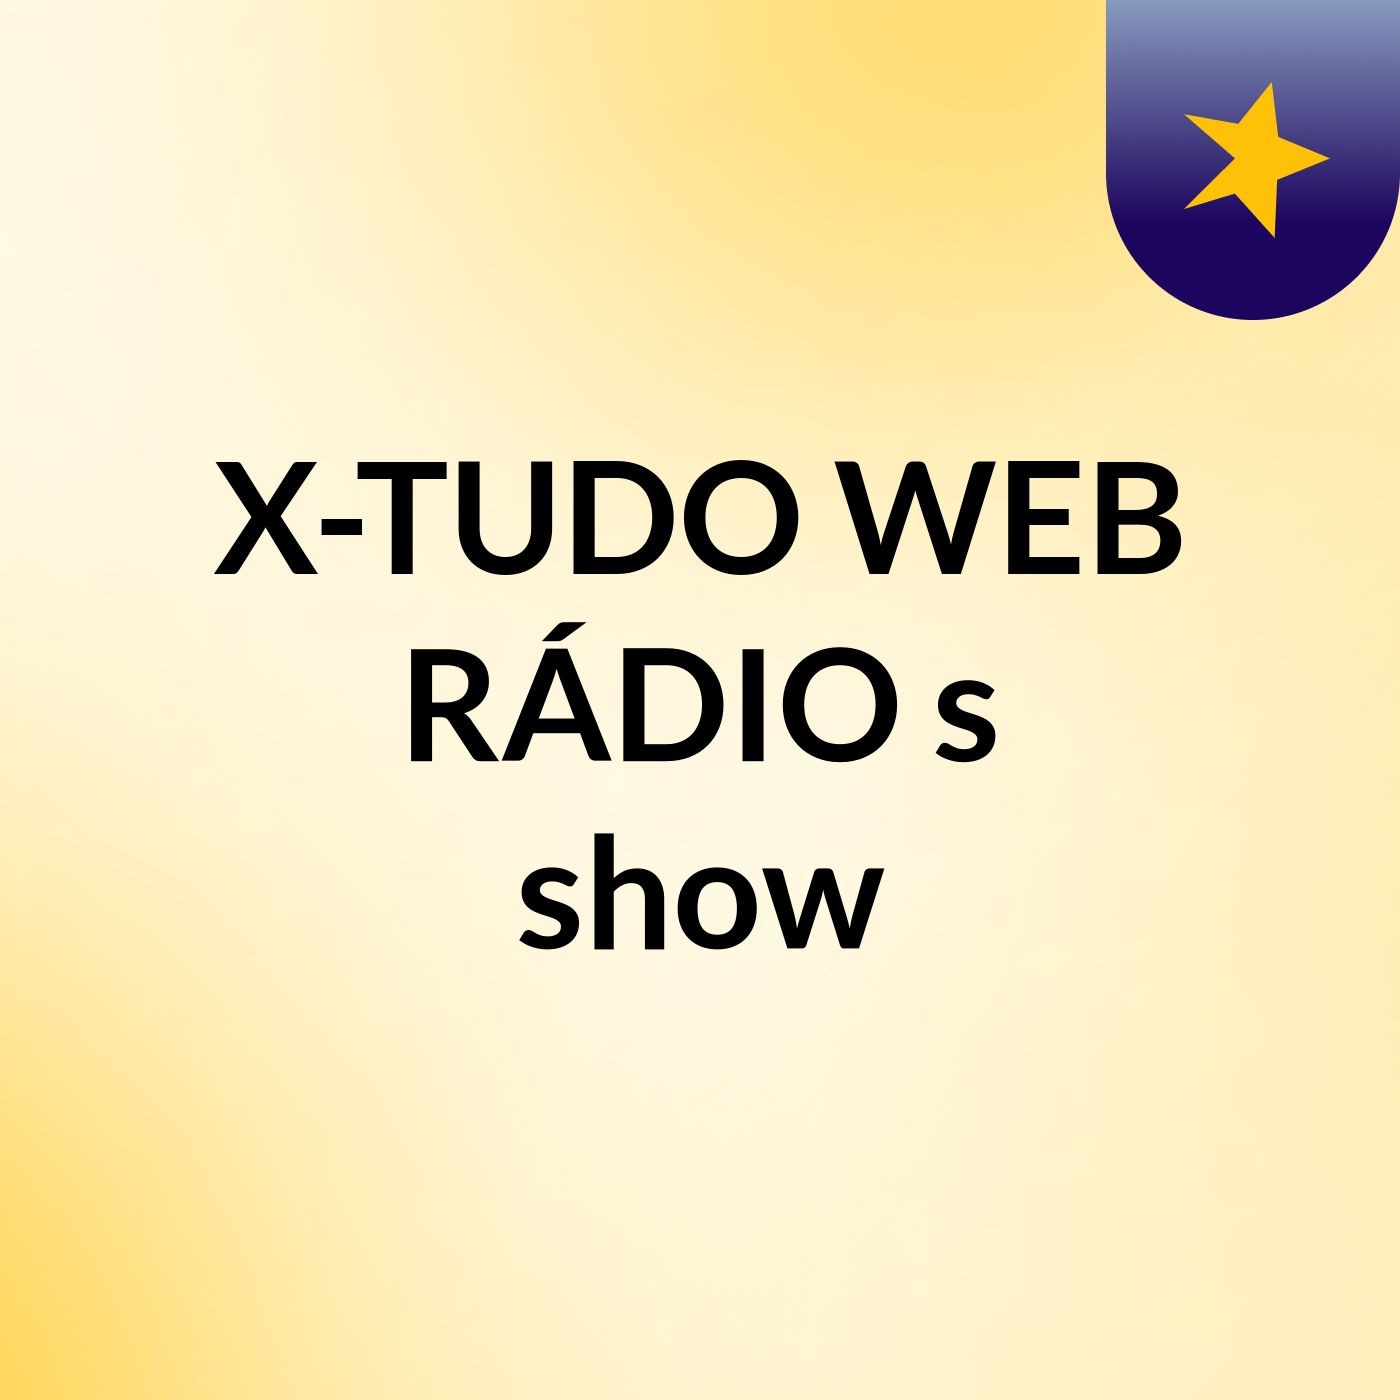 X-TUDO WEB RÁDIO's show